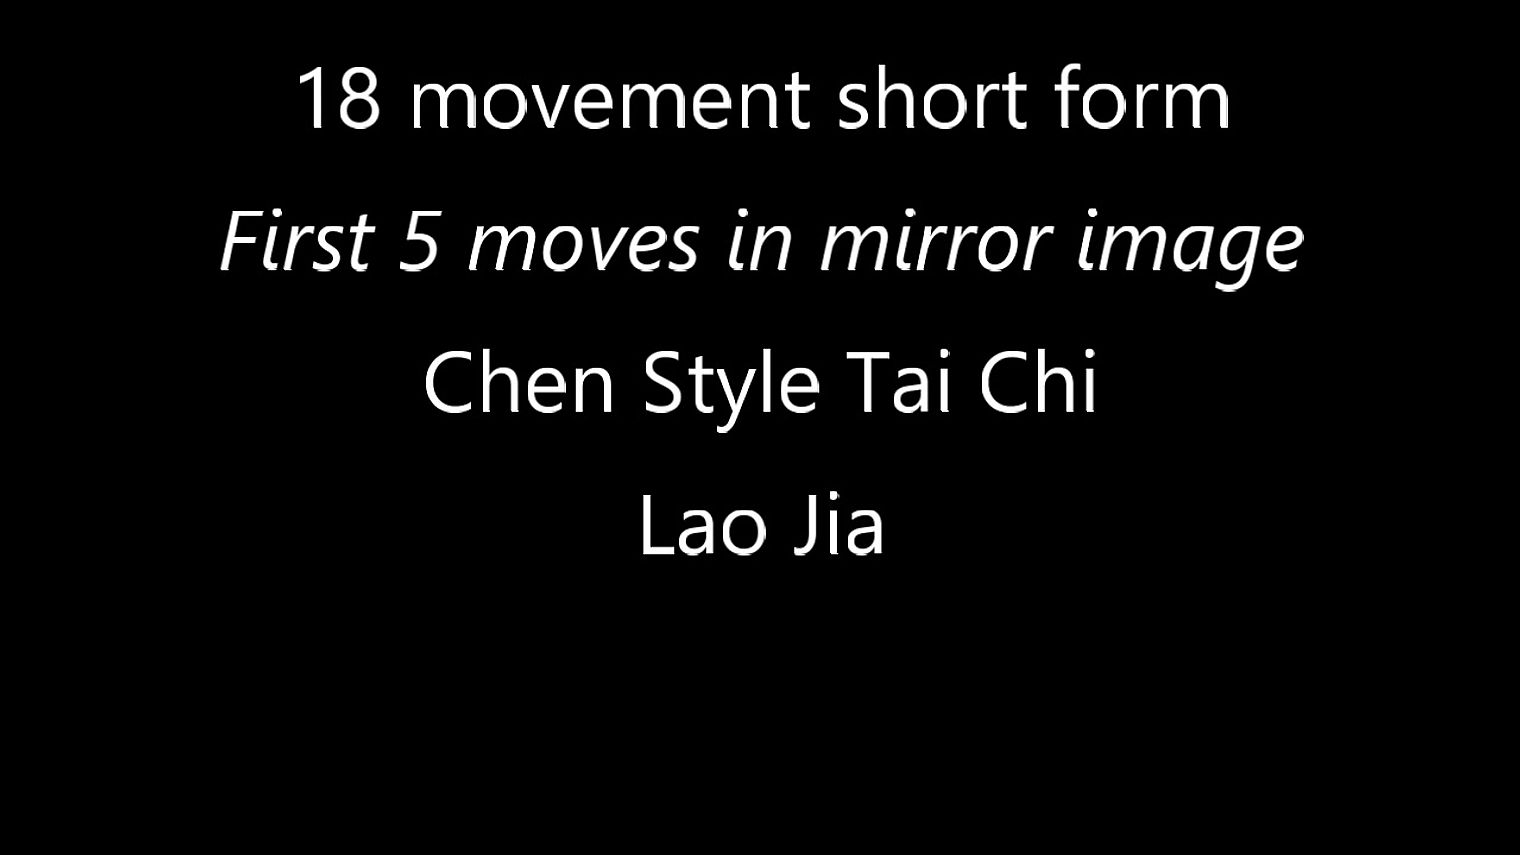 Tai Chi Short Form - Chen style 18 movement